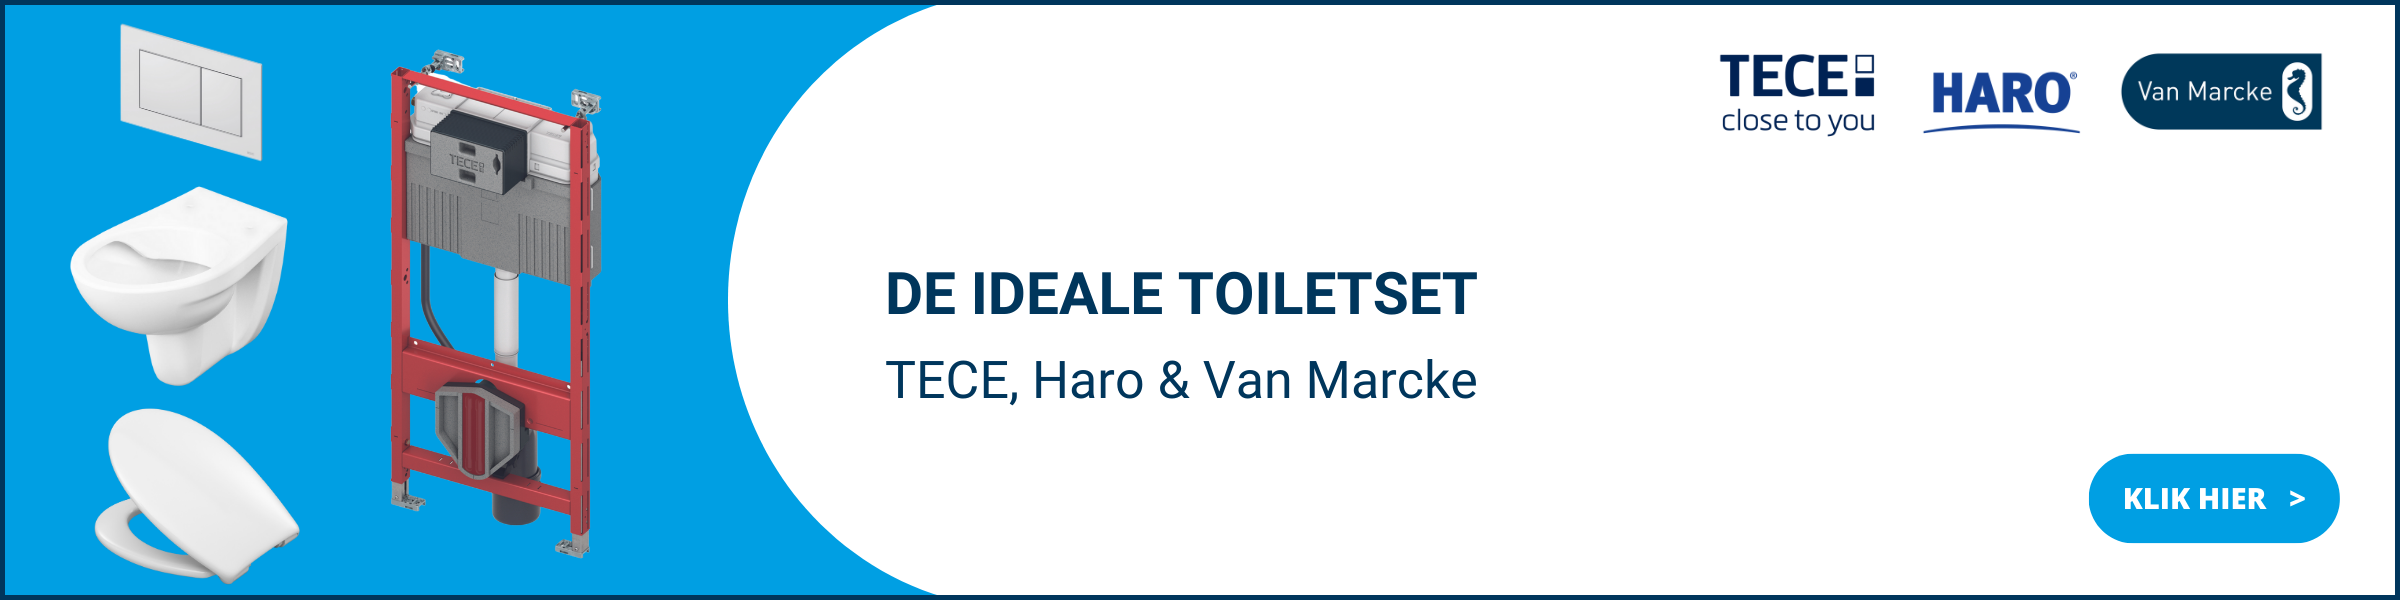 toiletset homepage banner BLUE_NL.png